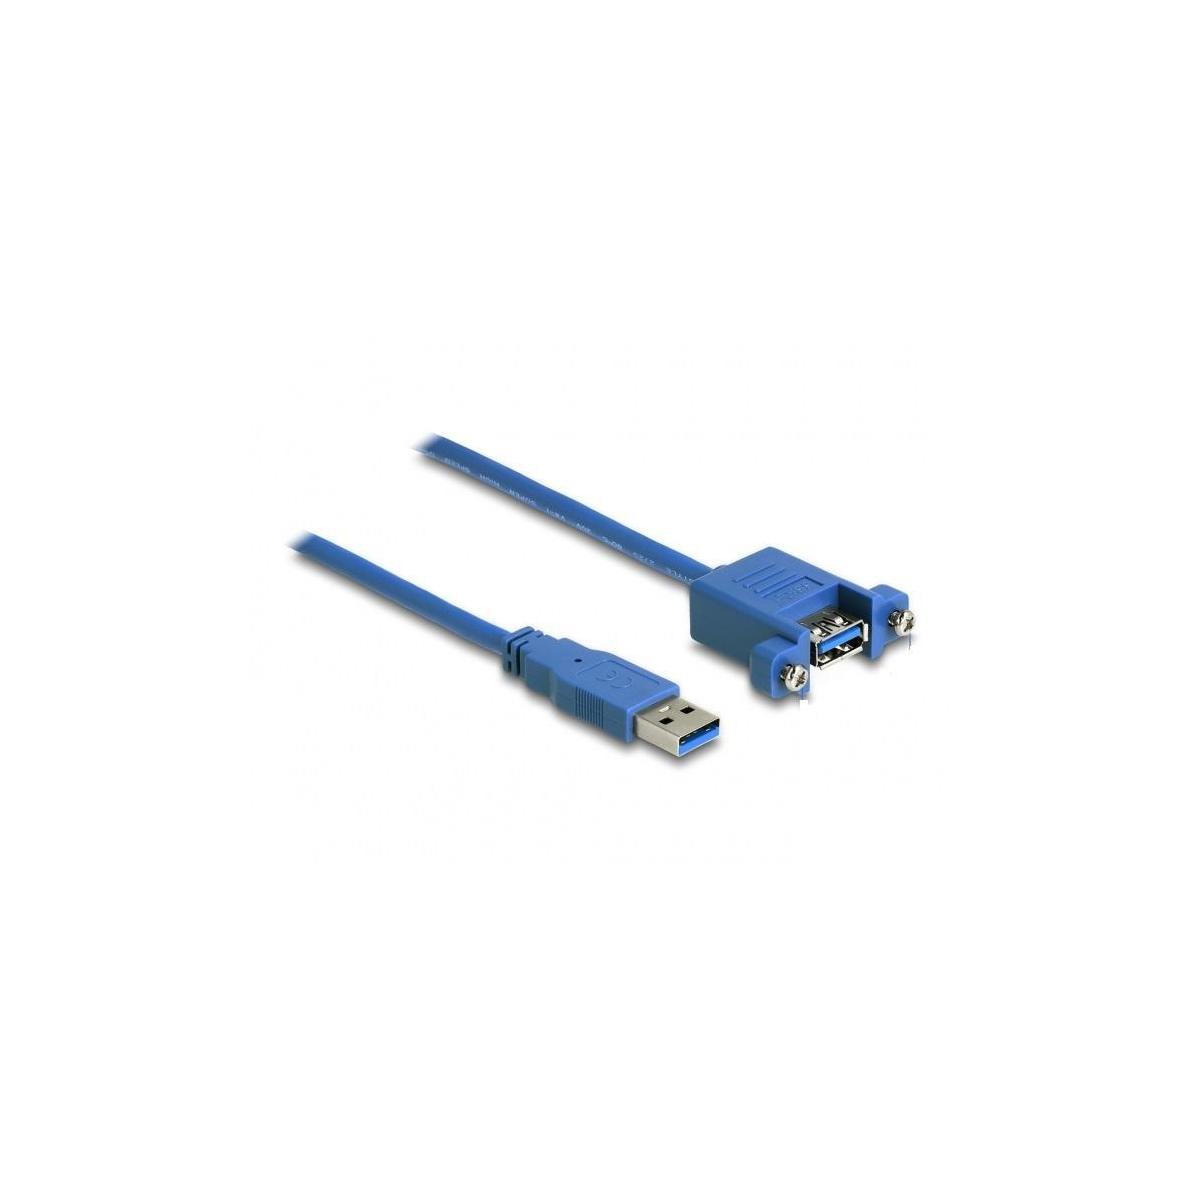 USB DELOCK Kabel, 85112 Blau